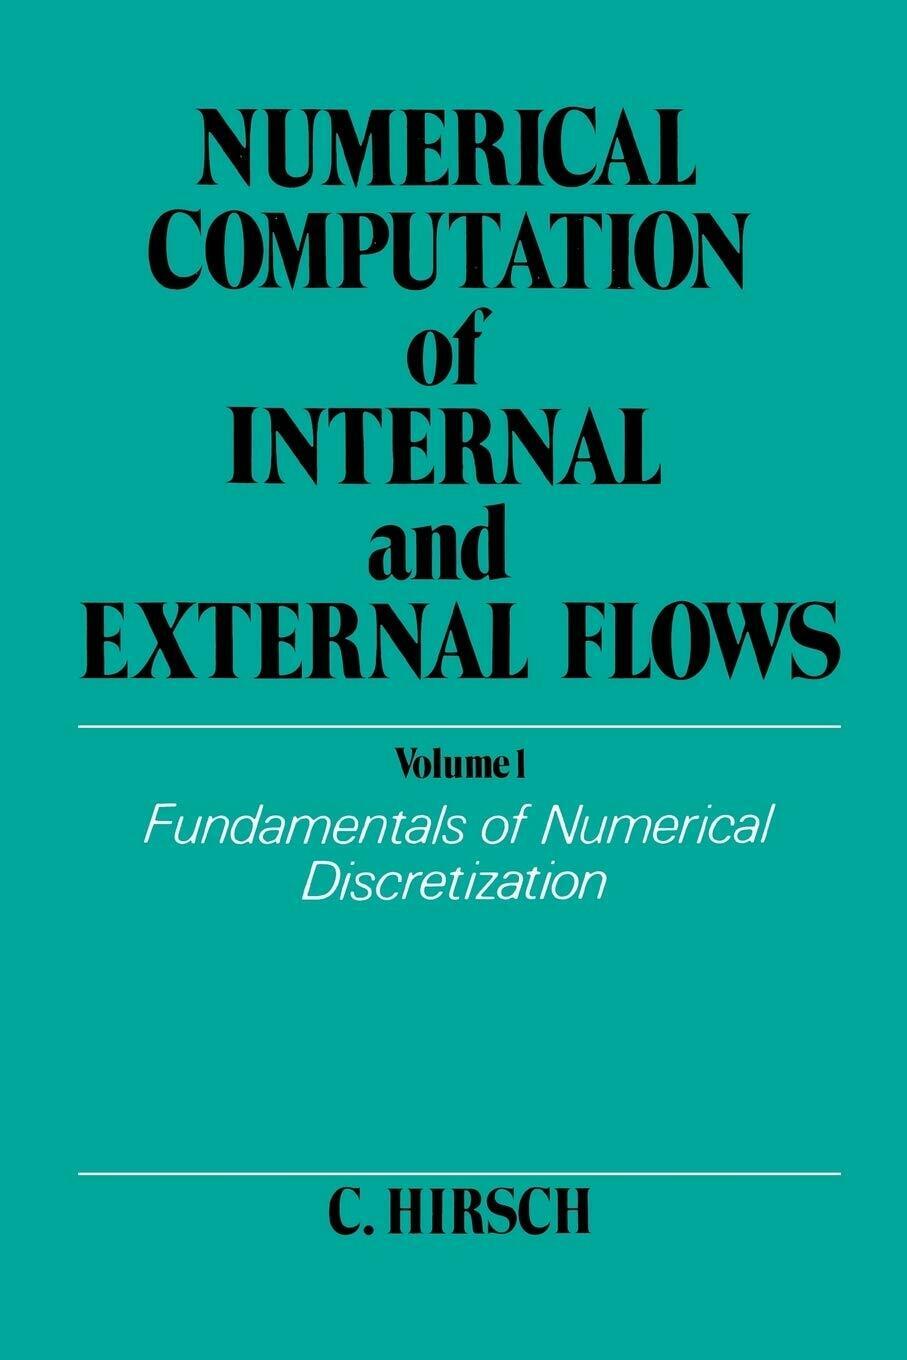 Numerical Computation V 1 - Hirsch - John Wiley & Sons, 1989